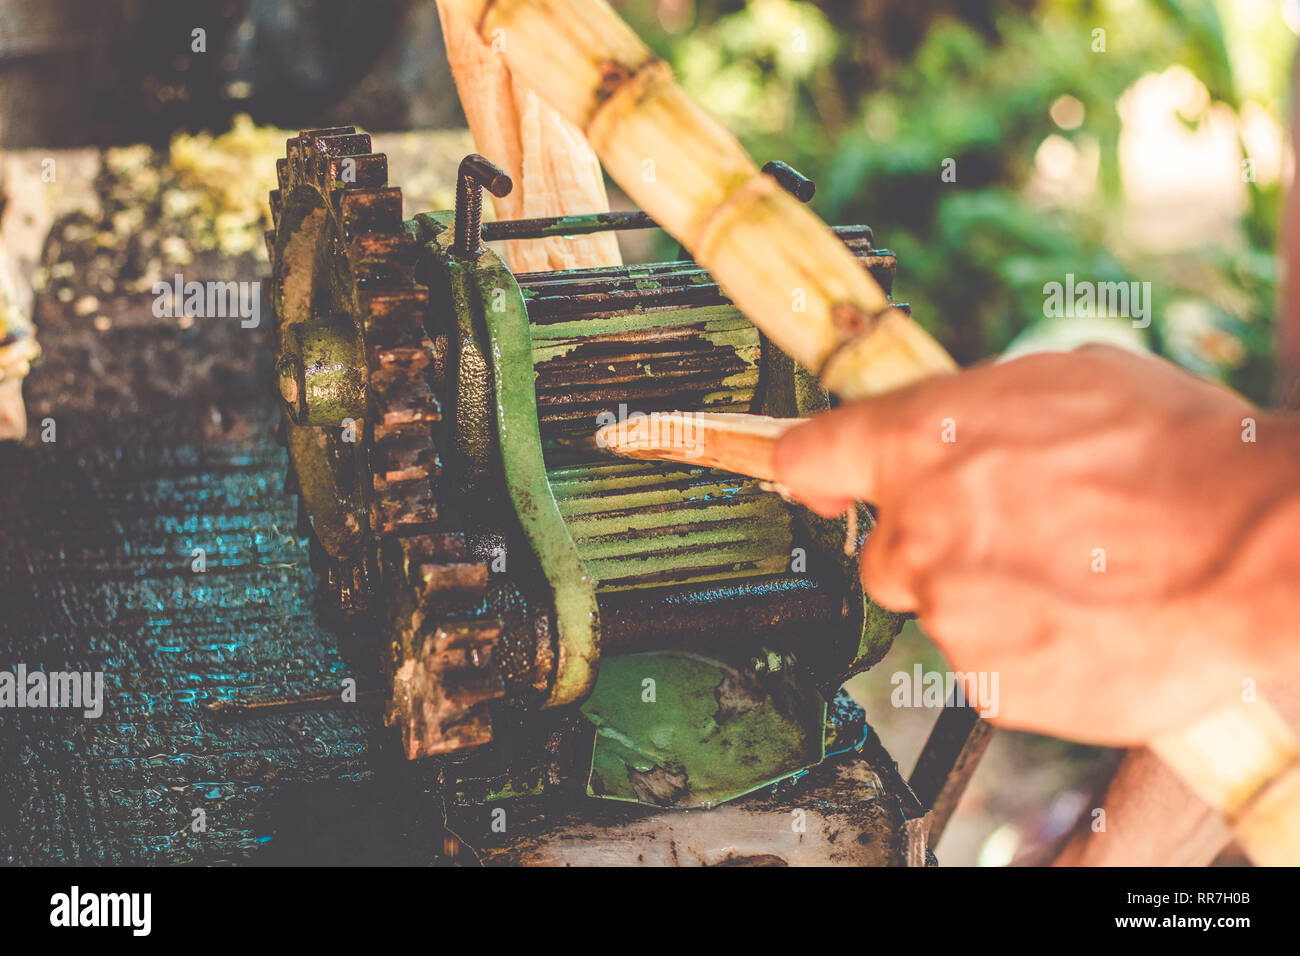 Man doing sugarcane juice on a old manual machine Stock Photo